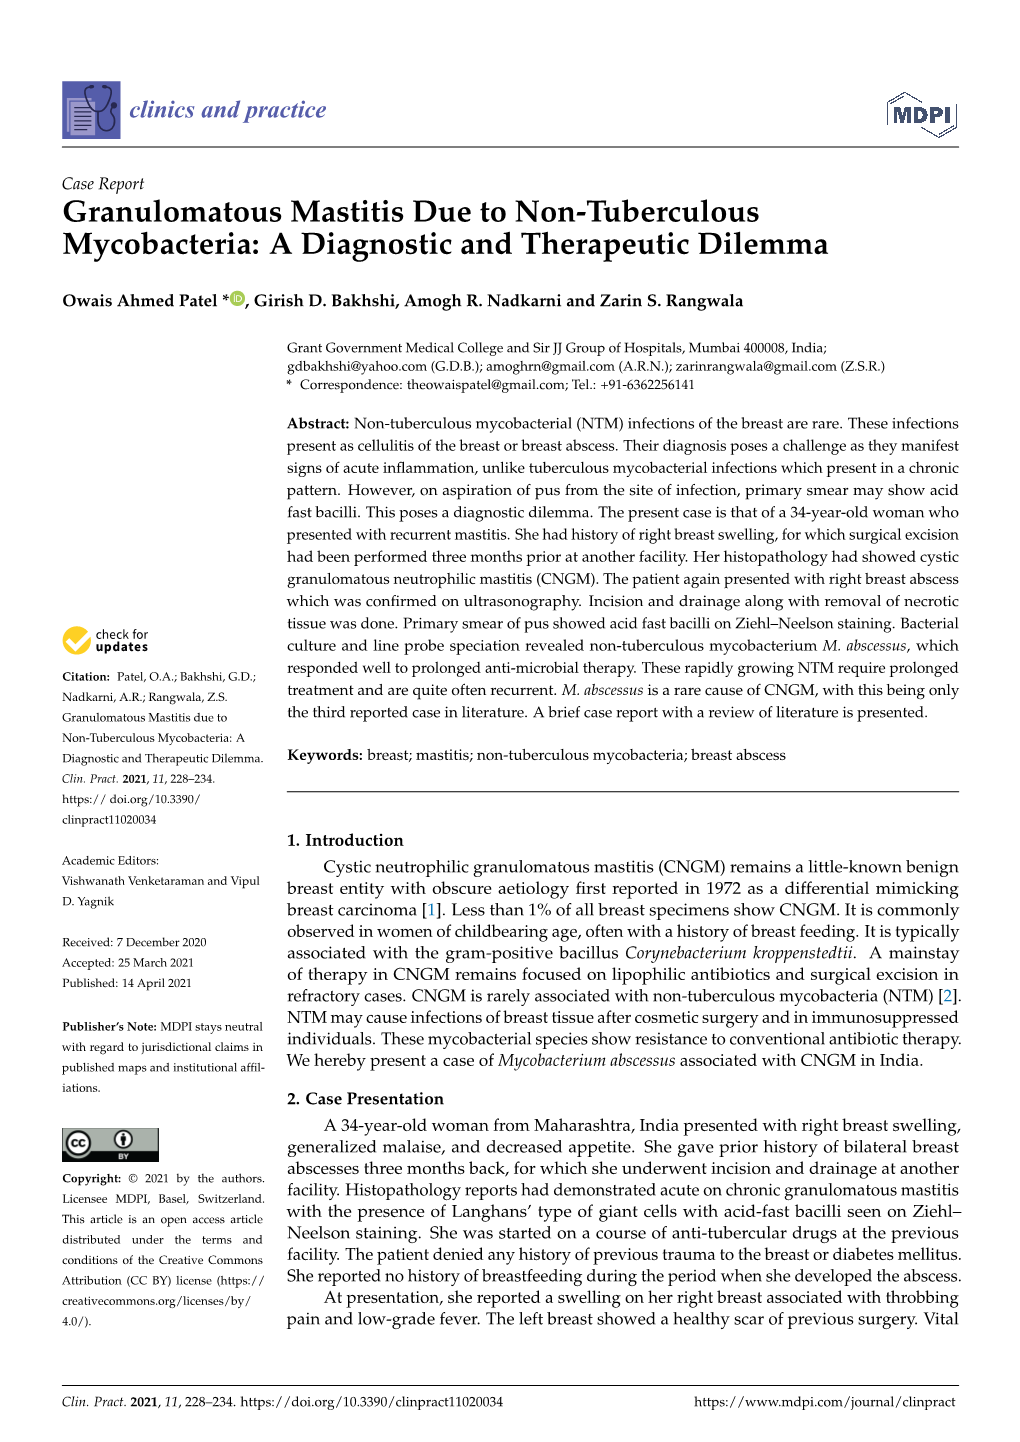 Granulomatous Mastitis Due to Non-Tuberculous Mycobacteria: a Diagnostic and Therapeutic Dilemma